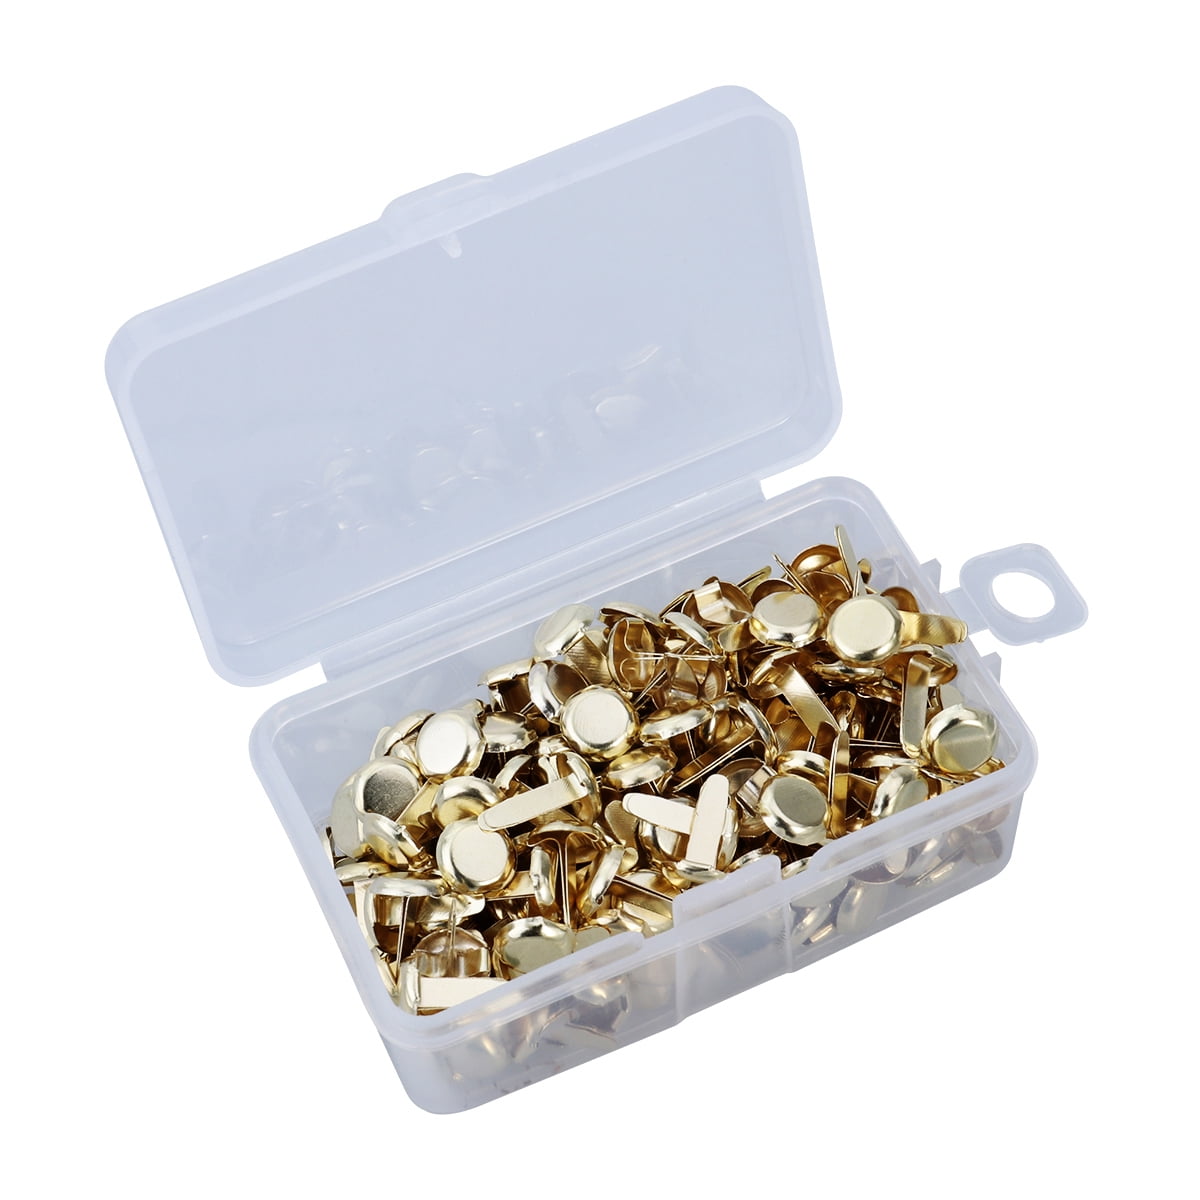 Aooba 100 PCS Mini Brads Gold Paper Fasteners, Round Brass Metal Brads for  Art Crafting, Decorative Scrapbooking DIY, 8x15mm (100 pcs)